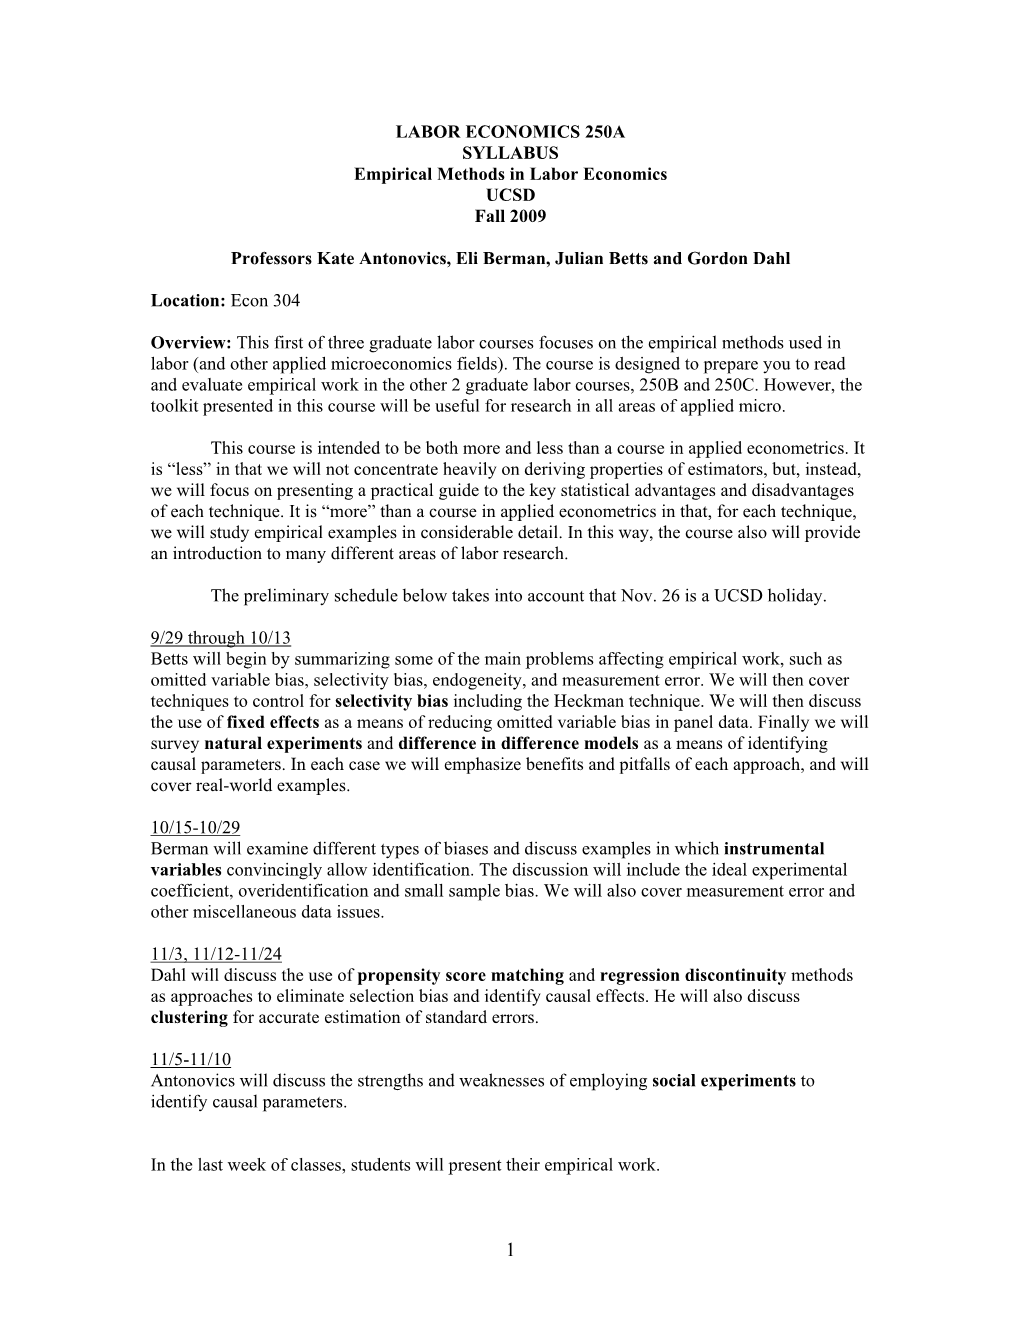 LABOR ECONOMICS 250A SYLLABUS Empirical Methods in Labor Economics UCSD Fall 2009